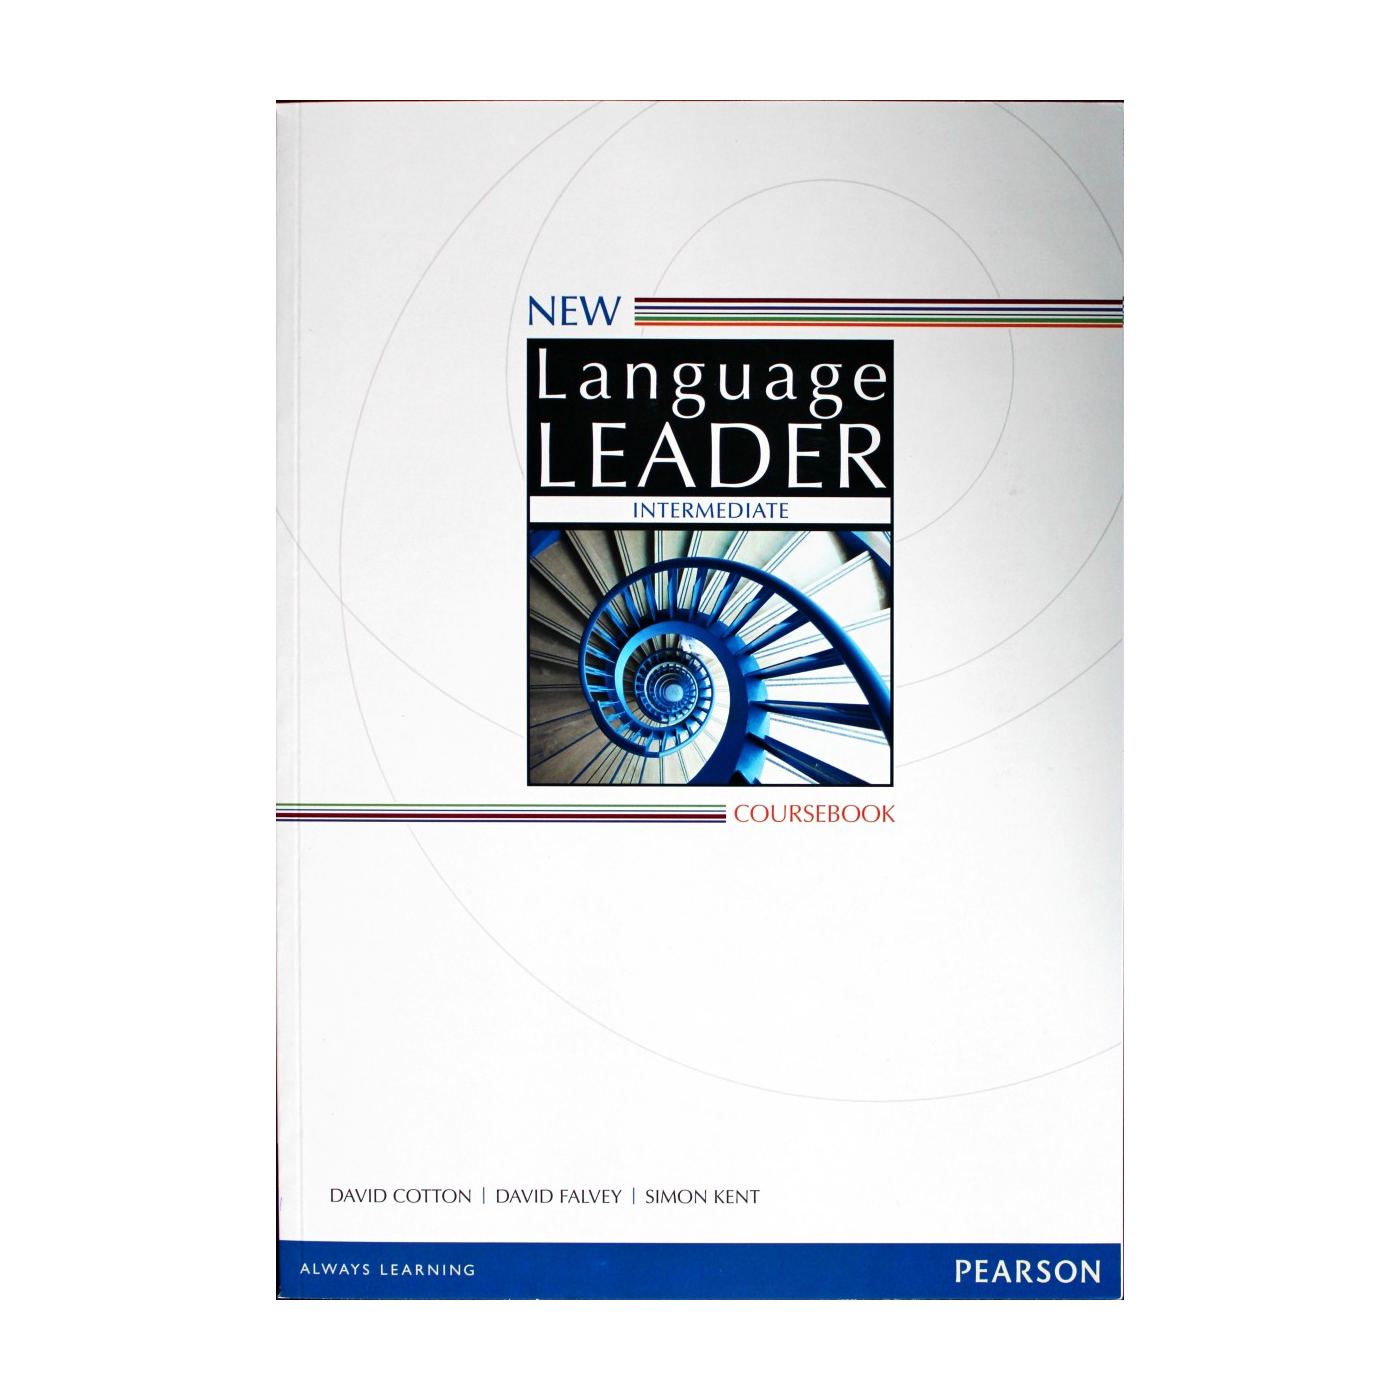 New leader upper intermediate. New language leader Upper Intermediate. New language leader Intermediate. Language leader Intermediate Coursebook.